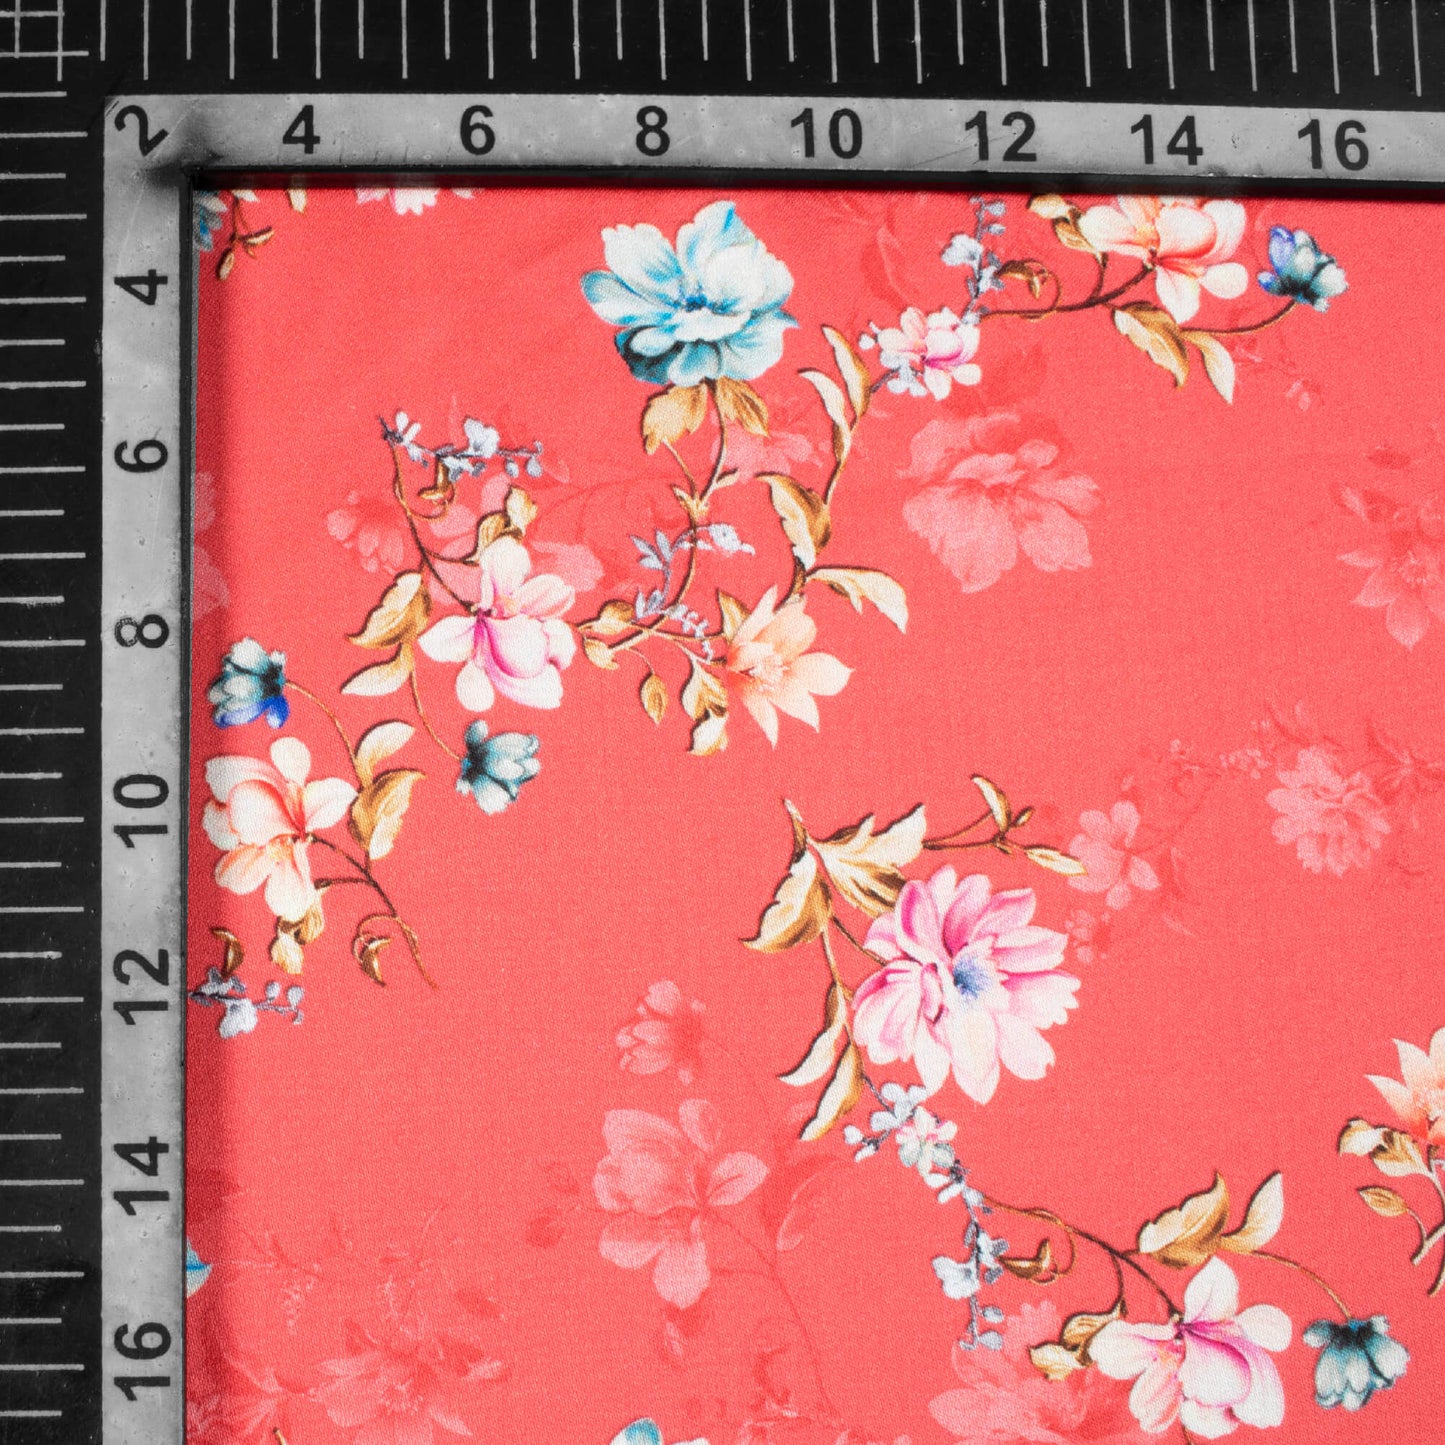 Coral Red And Pink Floral Pattern Digital Print Premium Lush Satin Fabric